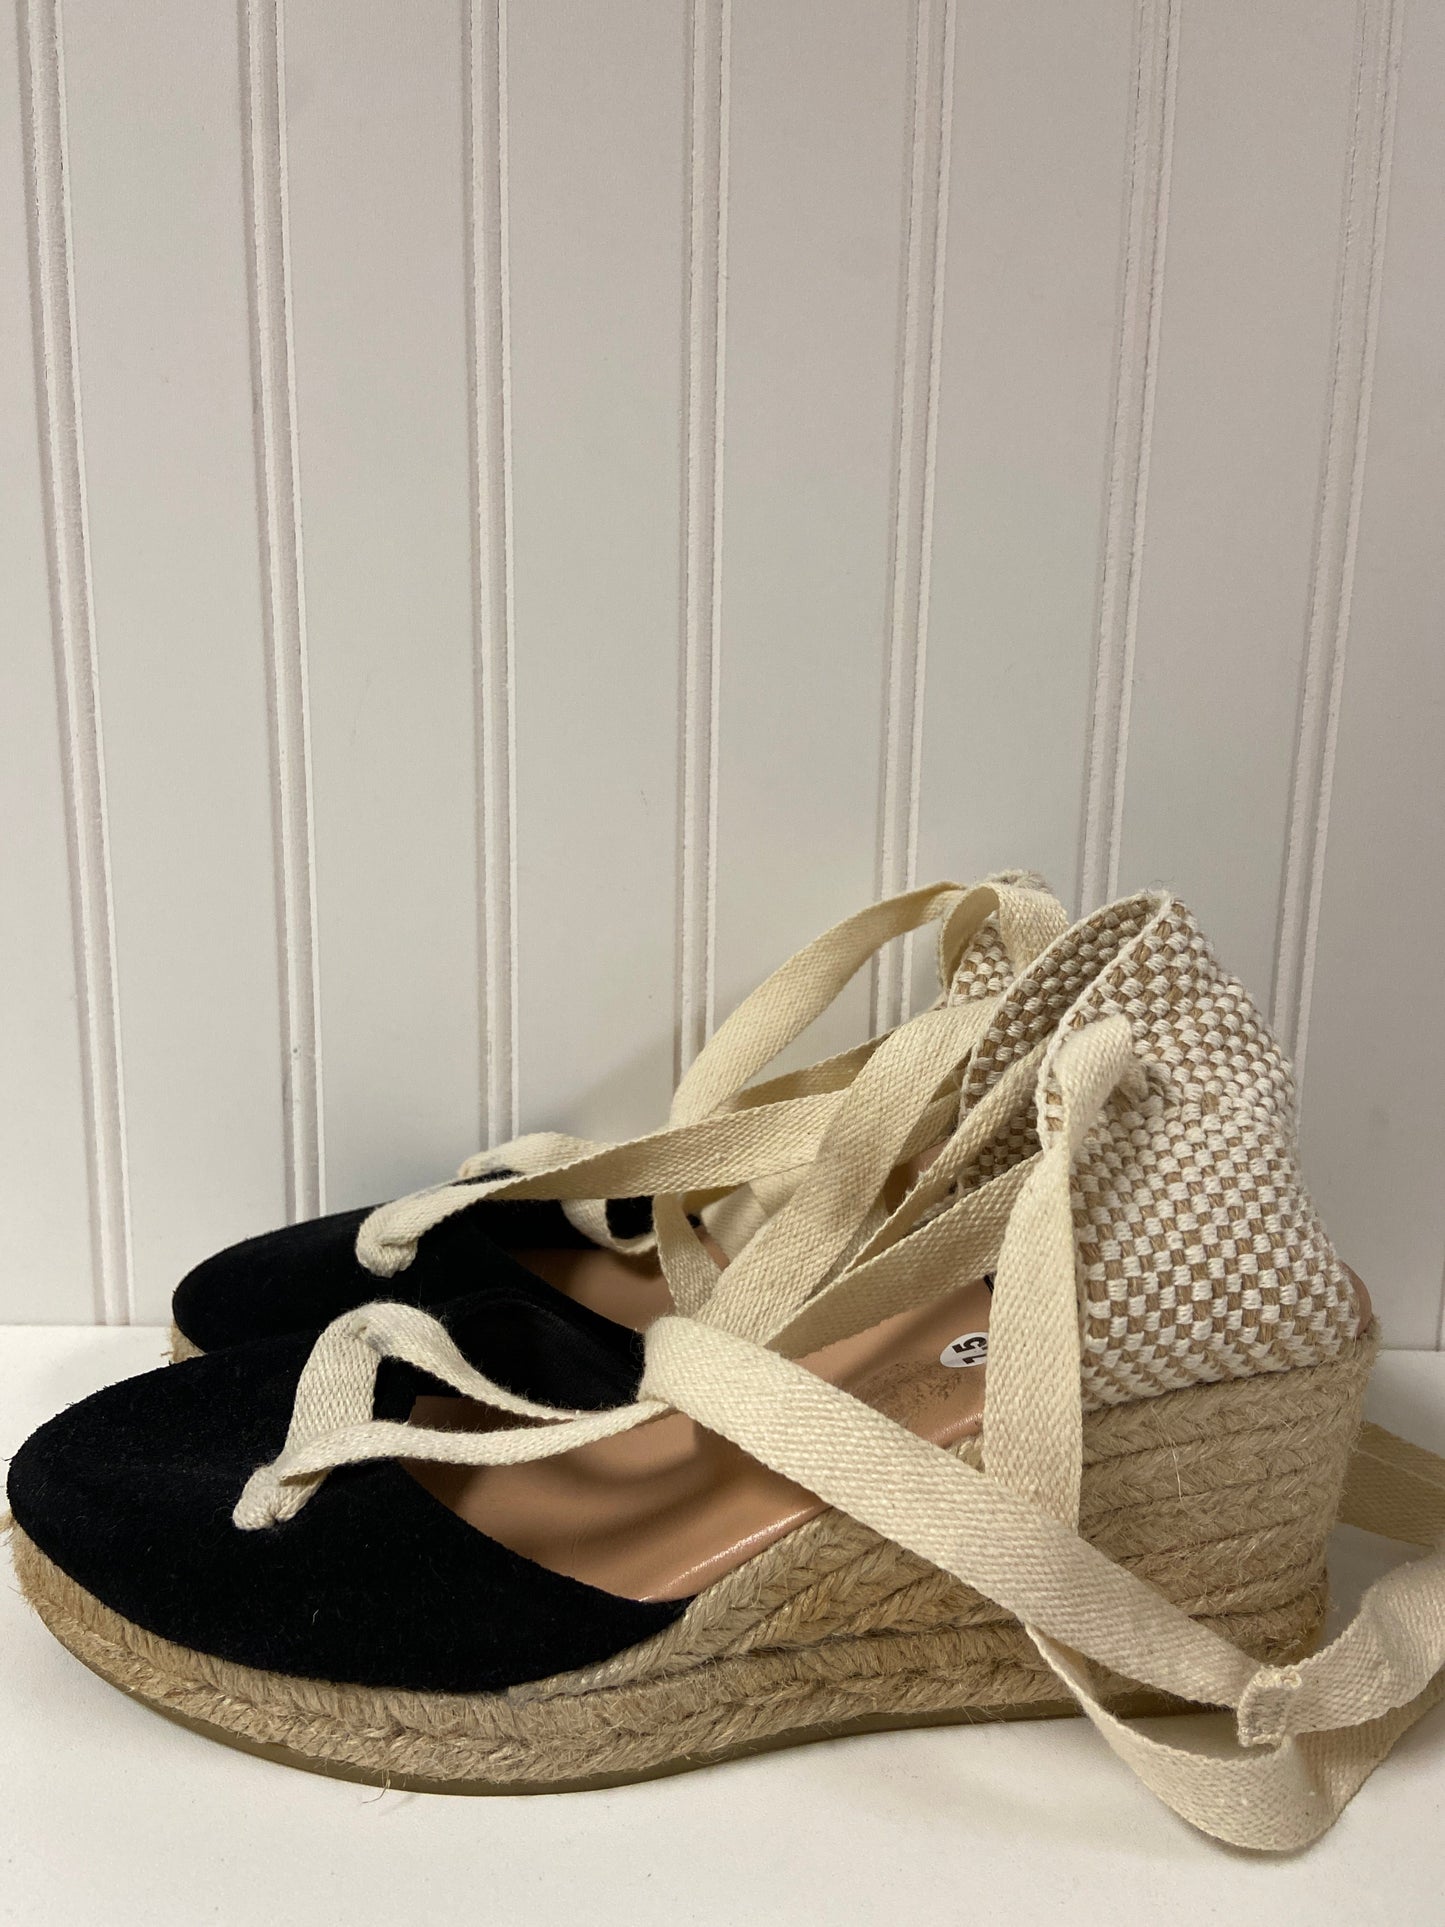 Black & Tan Sandals Heels Wedge Clothes Mentor, Size 7.5